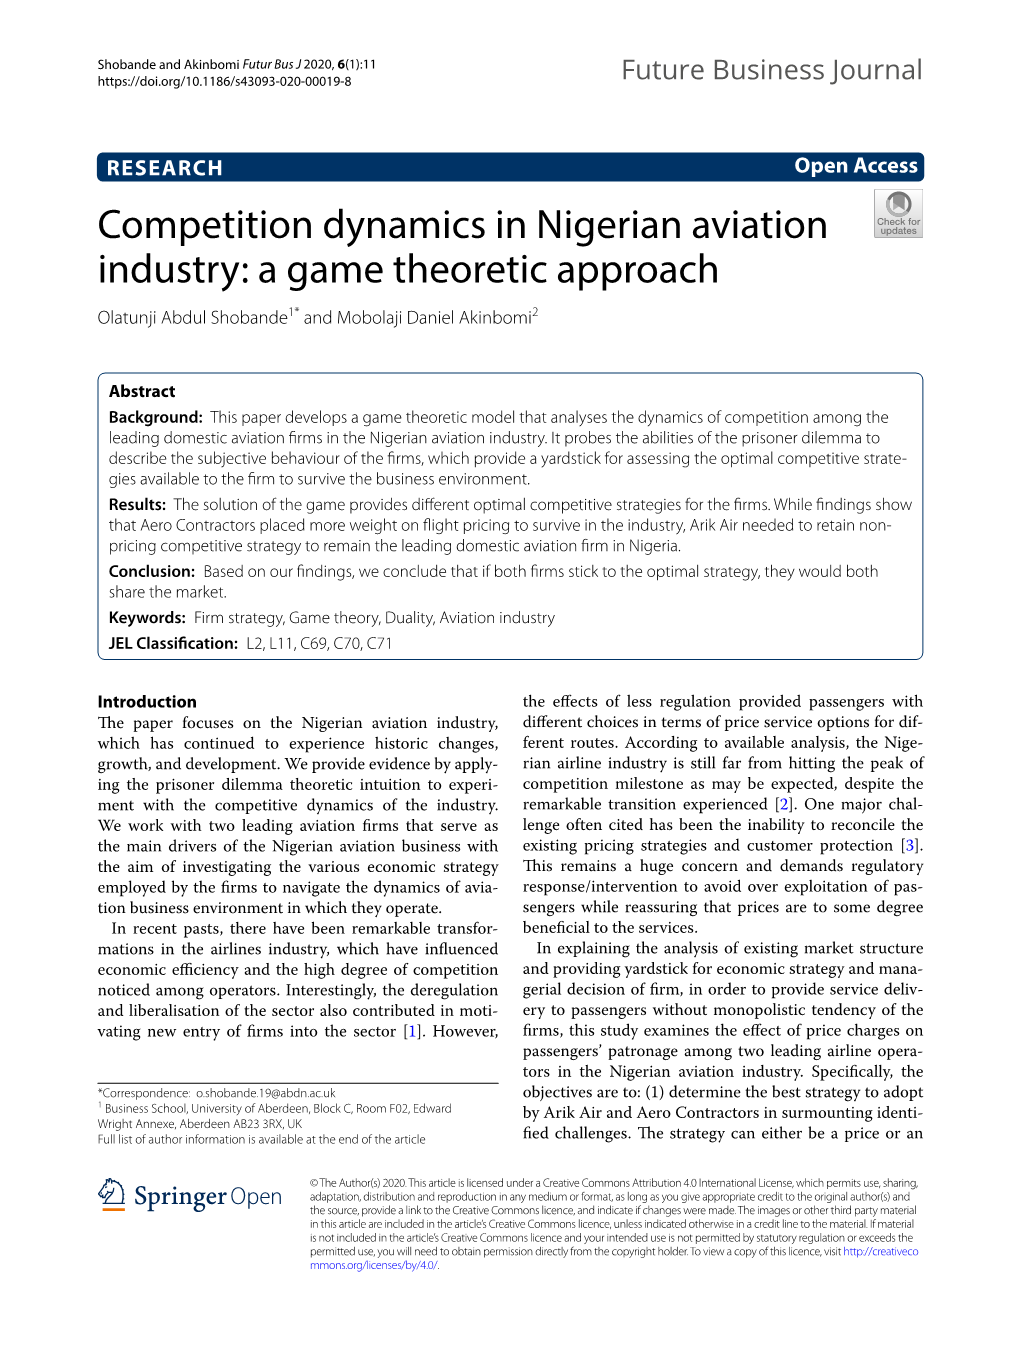 Competition Dynamics in Nigerian Aviation Industry: a Game Theoretic Approach Olatunji Abdul Shobande1* and Mobolaji Daniel Akinbomi2